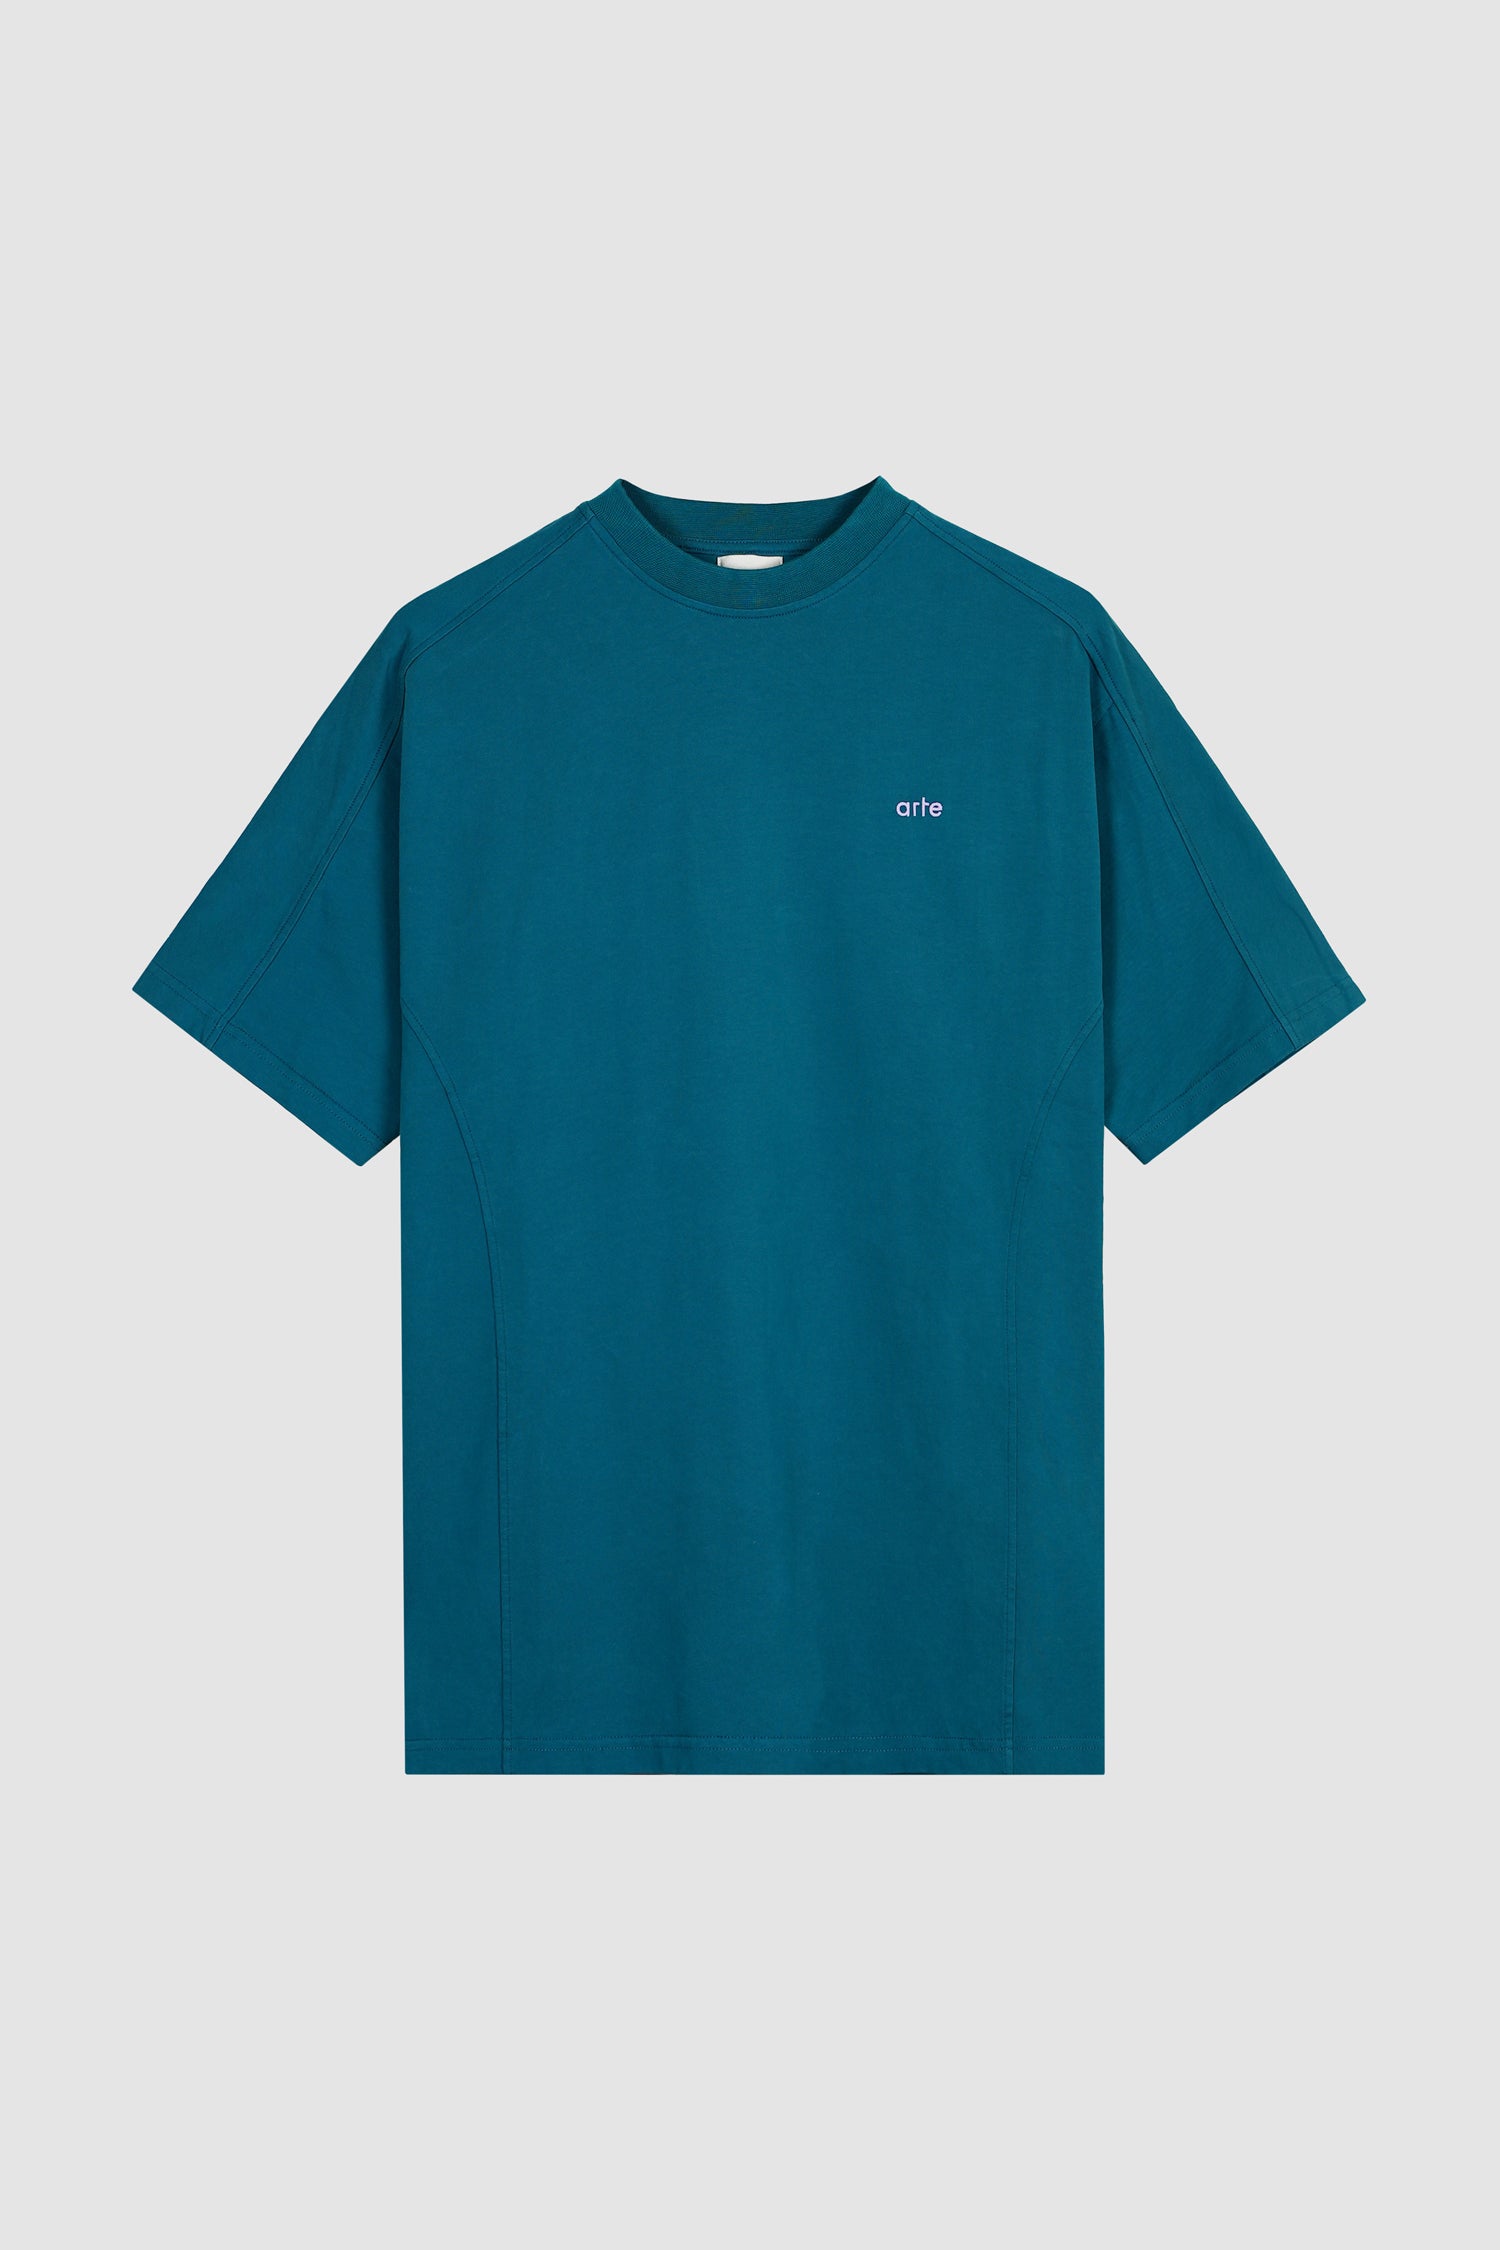 Theo S Cuts T-shirt - Lagoon Blue